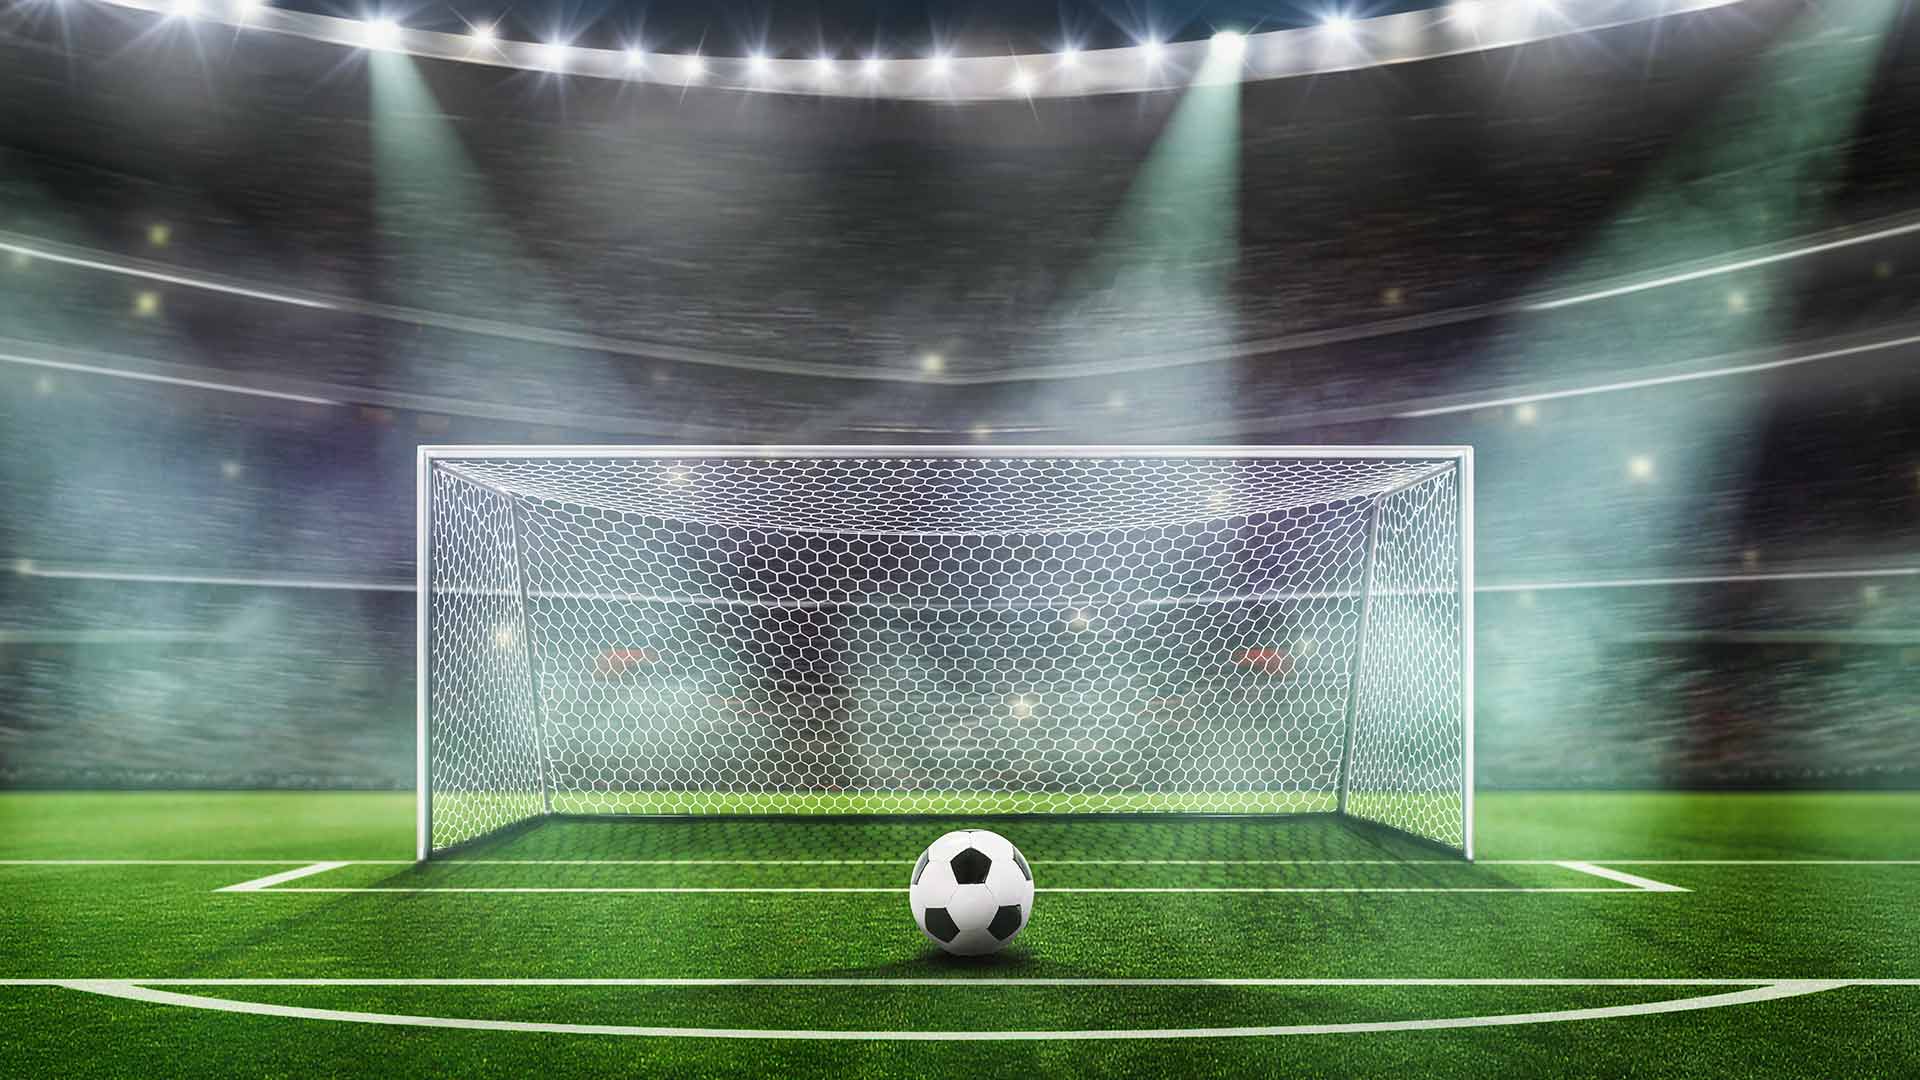 A football ready to be kicked into a net